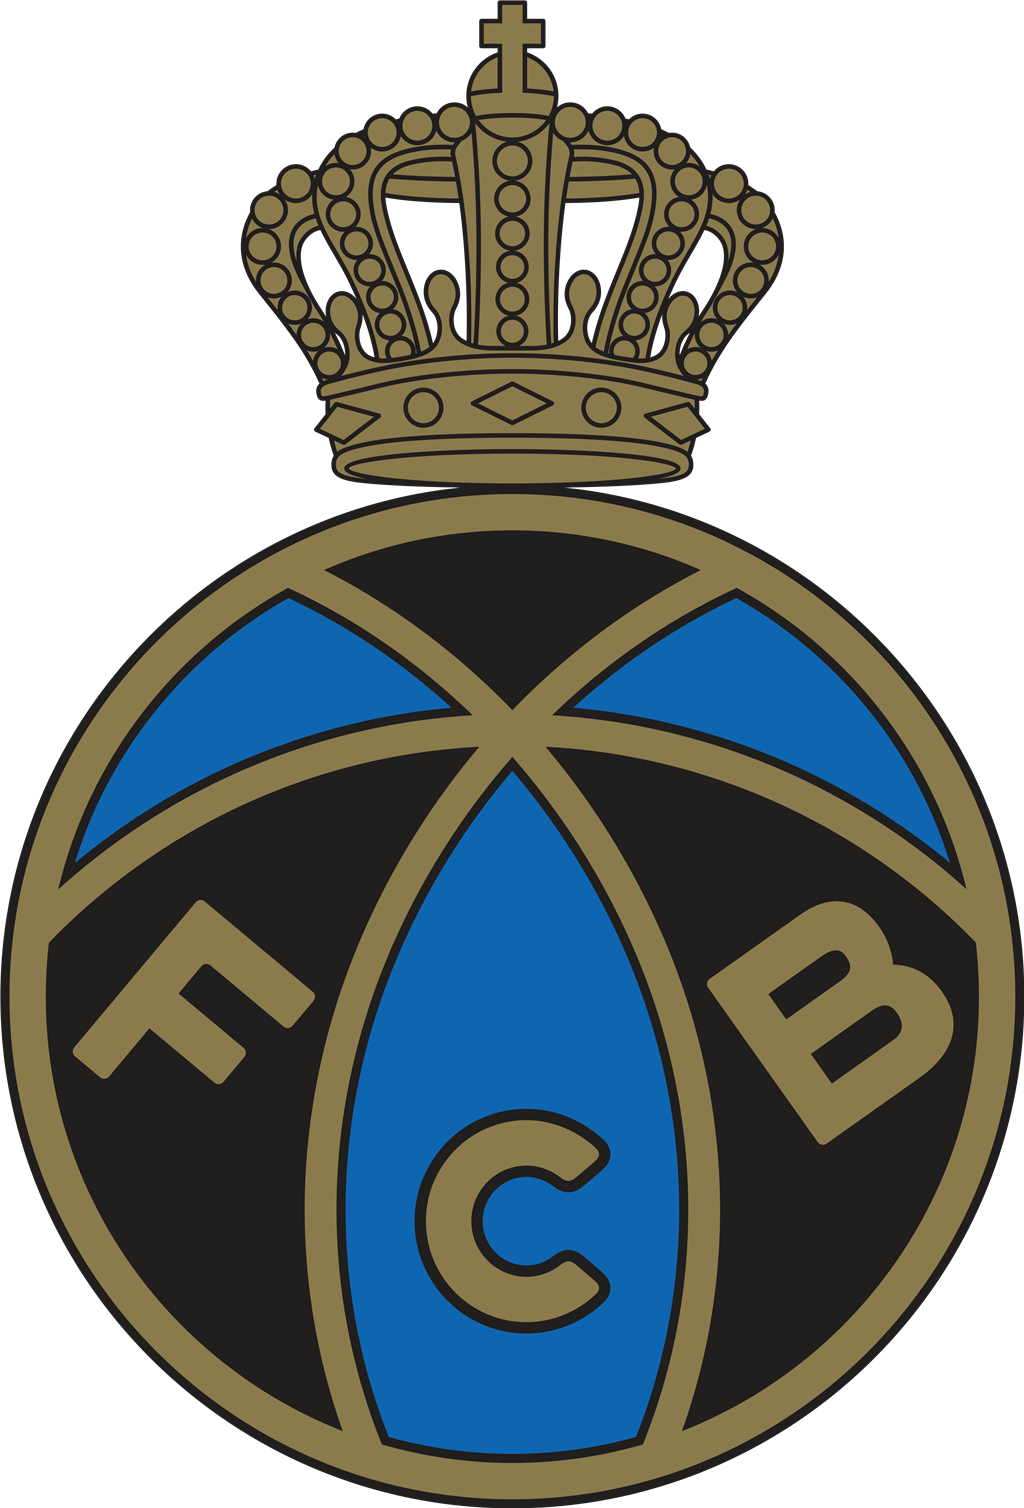 FC Brugge logotype, transparent .png, medium, large